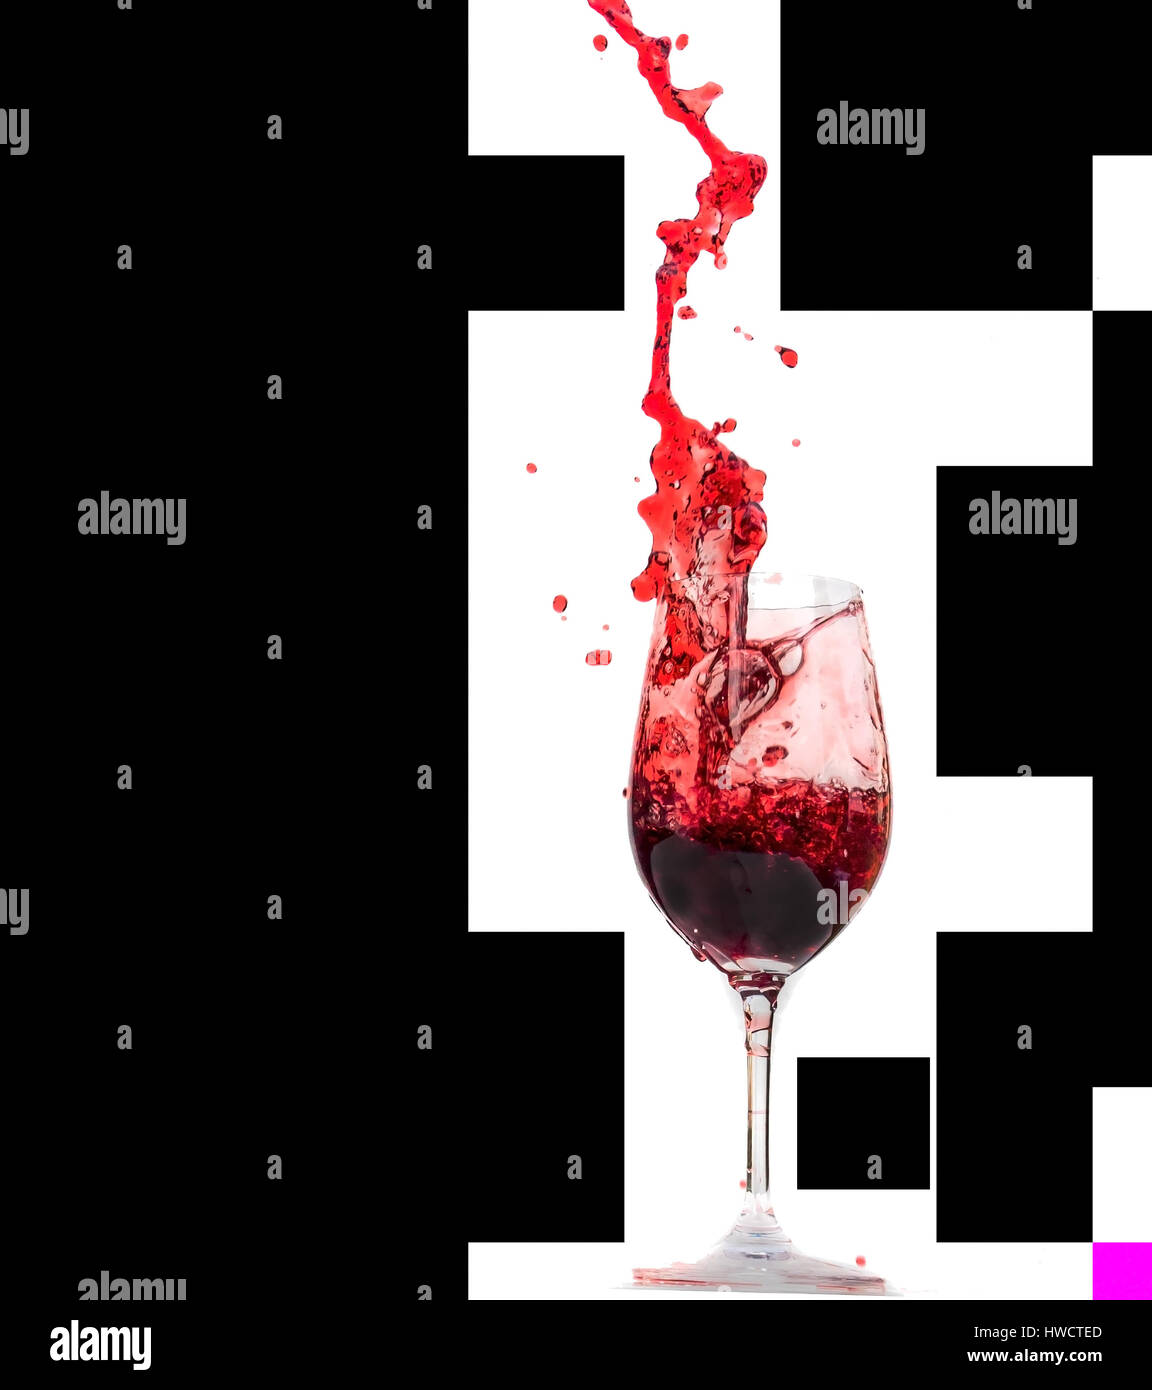 El vino tinto se vierte de un wineglass. En el vino rojo wineglass., Rotwein wird Aus einem Weinglas geschüttet. Wein im Rotweinglas. Foto de stock